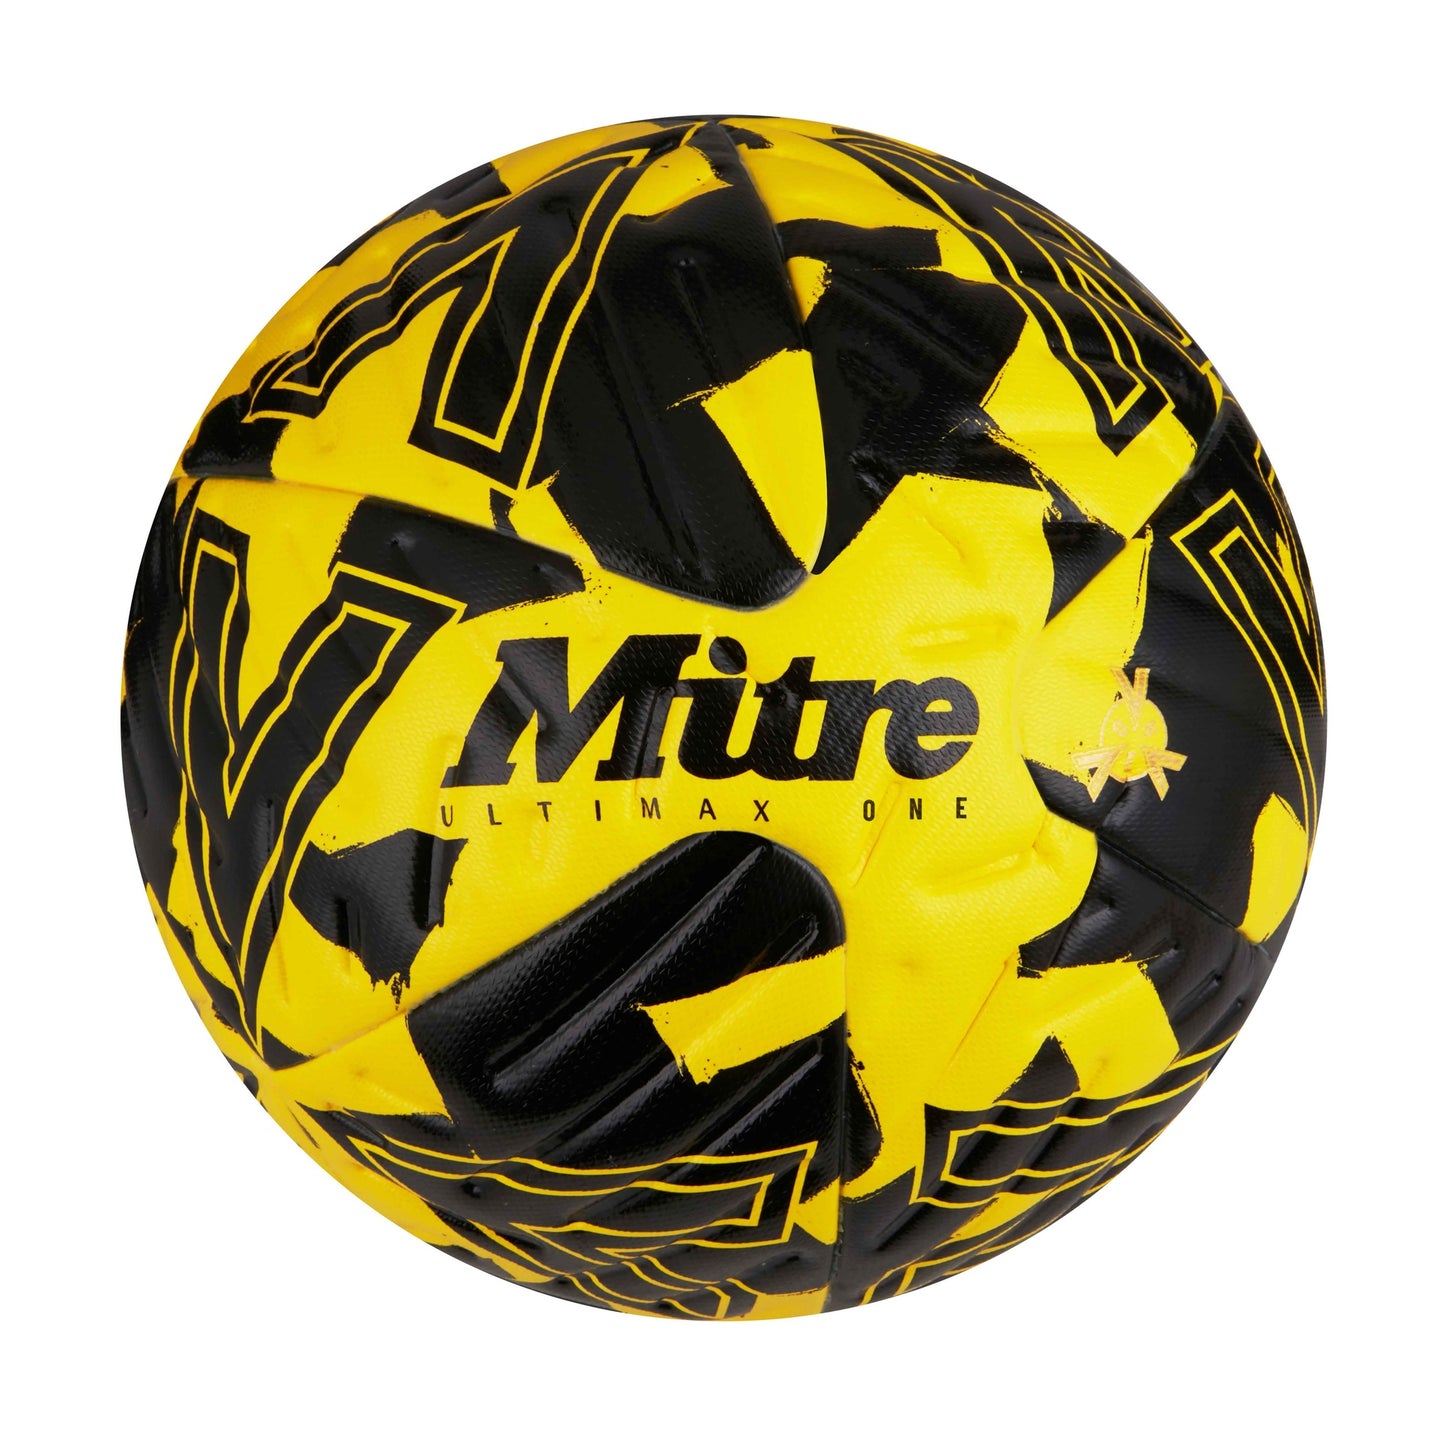 Mitre Ultimax One Football - 4 - Yellow/black/Black